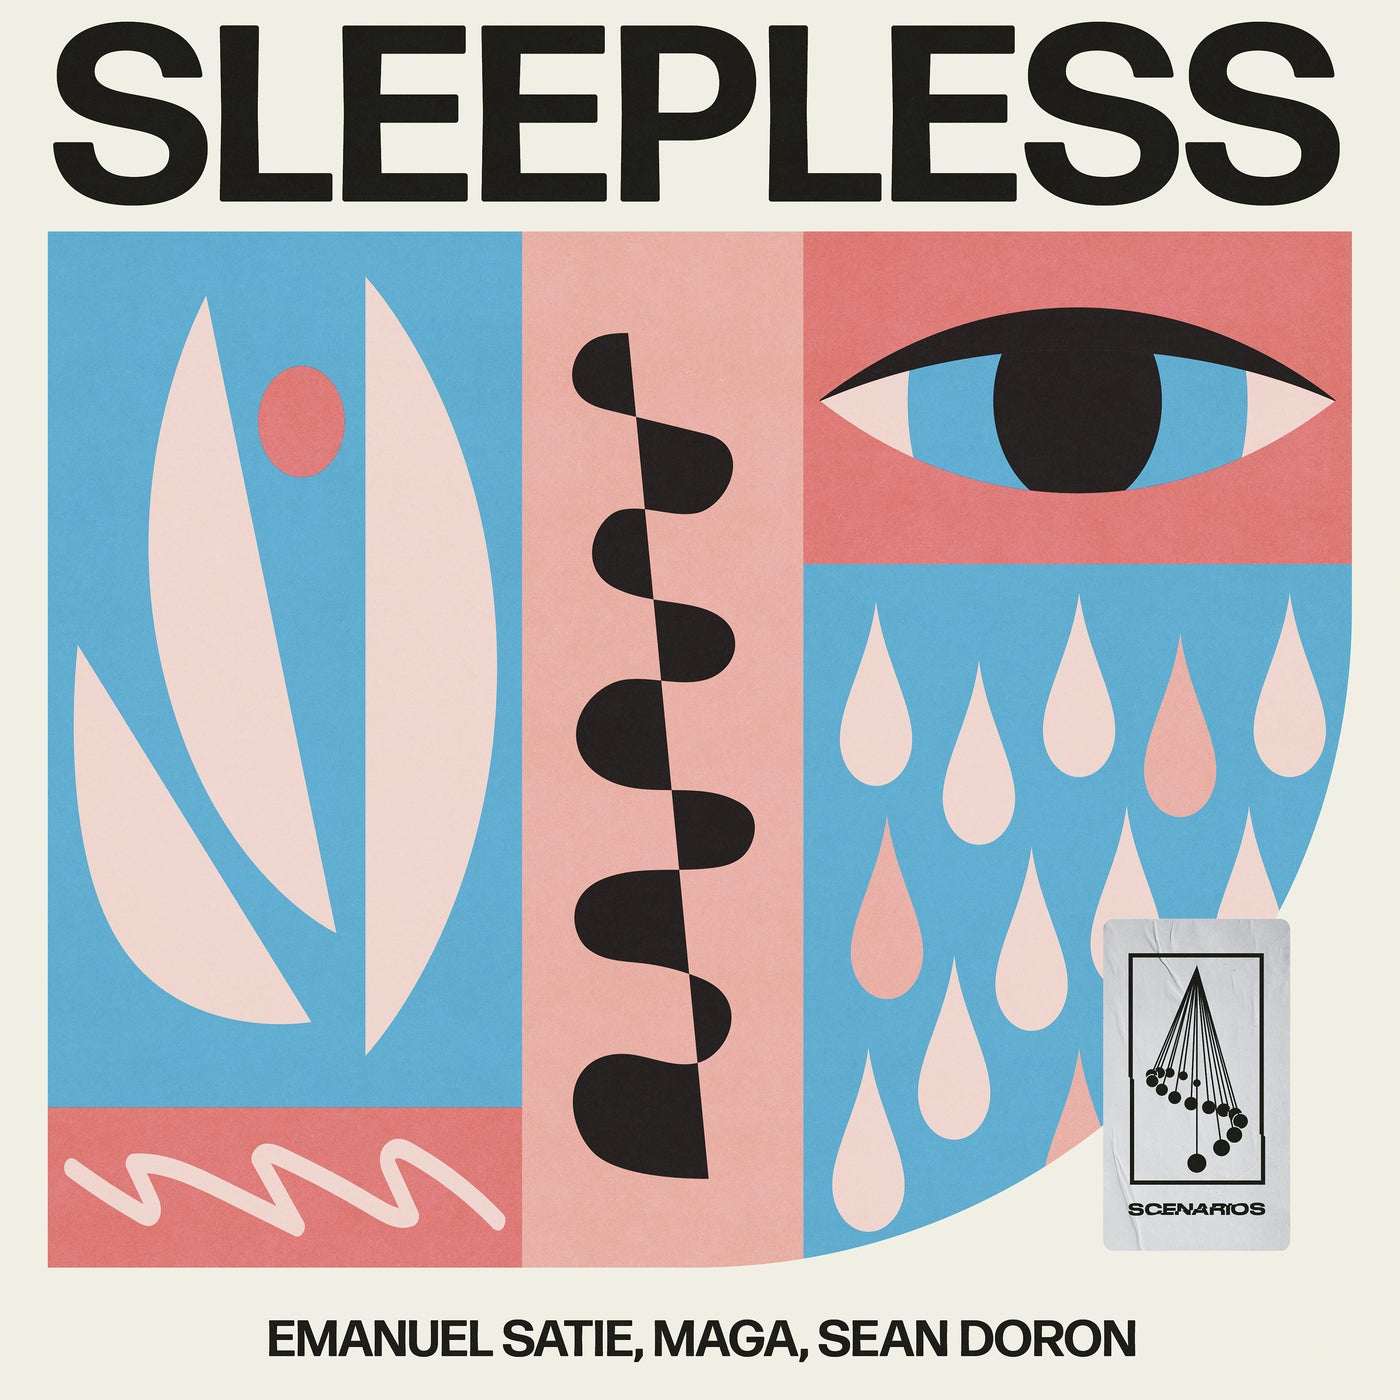 Emanuel Satie, Maga, Sean Doron - Sleepless on Scenarios